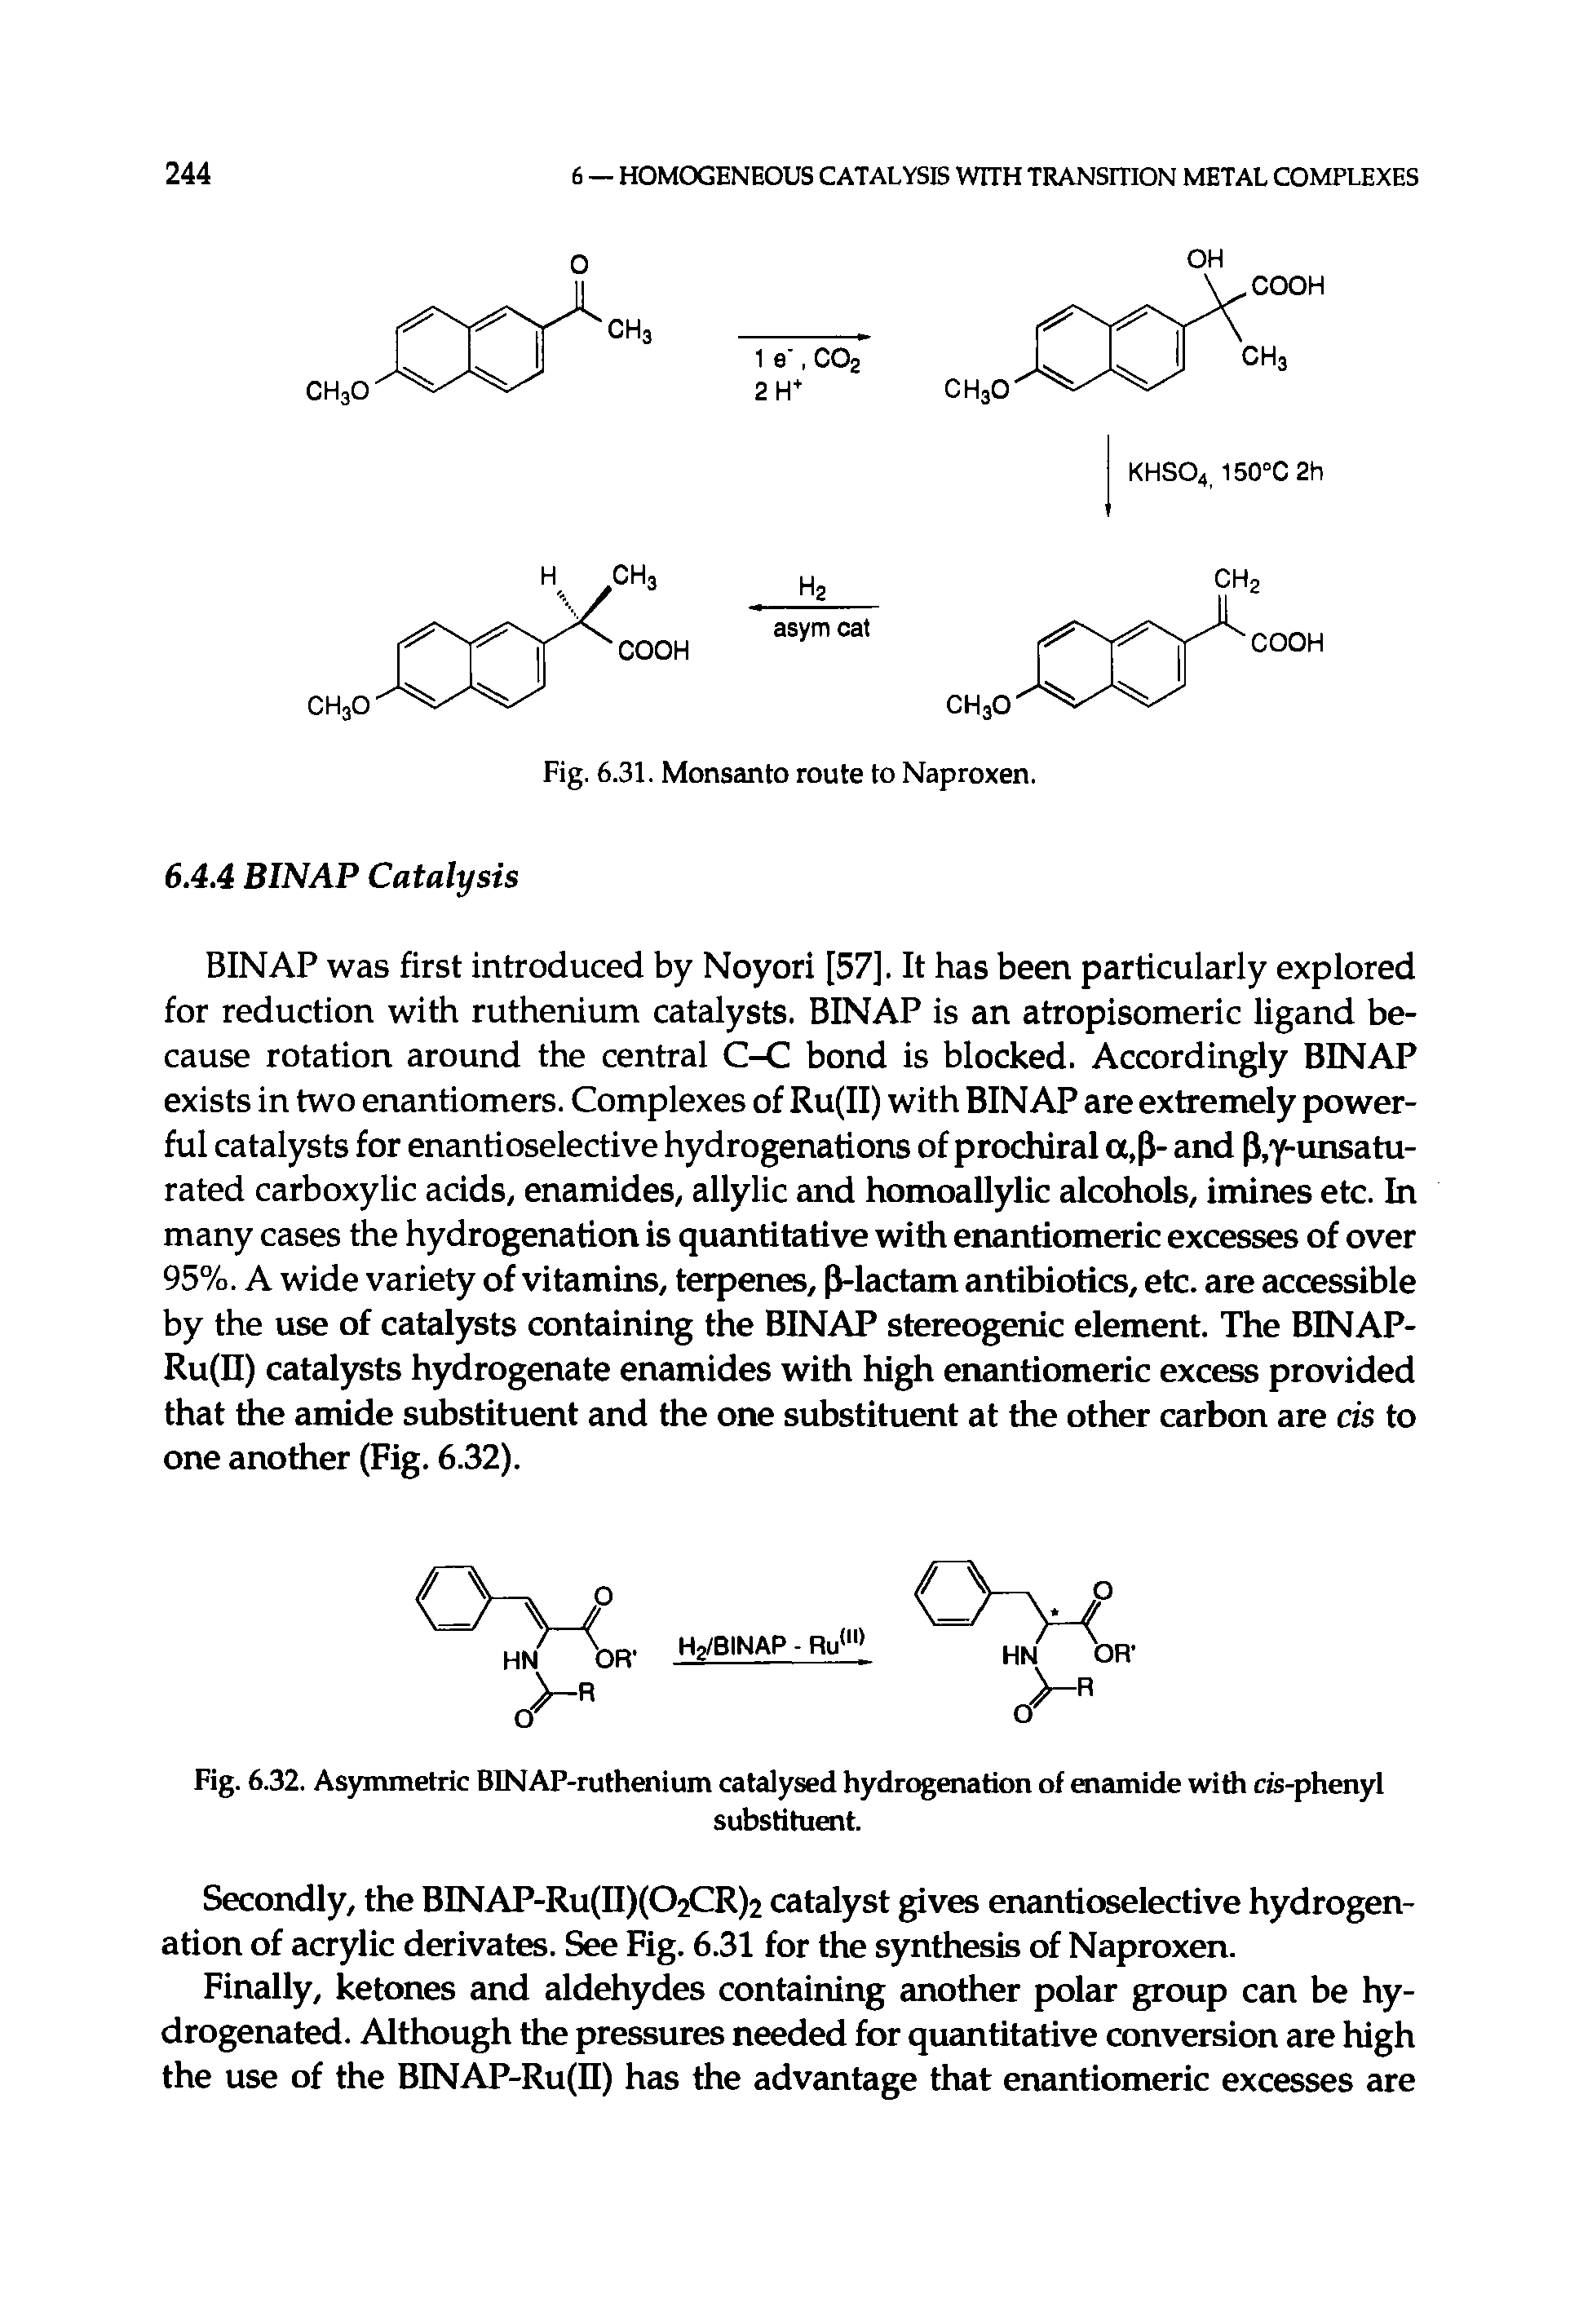 Fig. 6.32. Asymmetric BINAP-ruthenium catalysed hydrogenation of enamide with cis-phenyl...